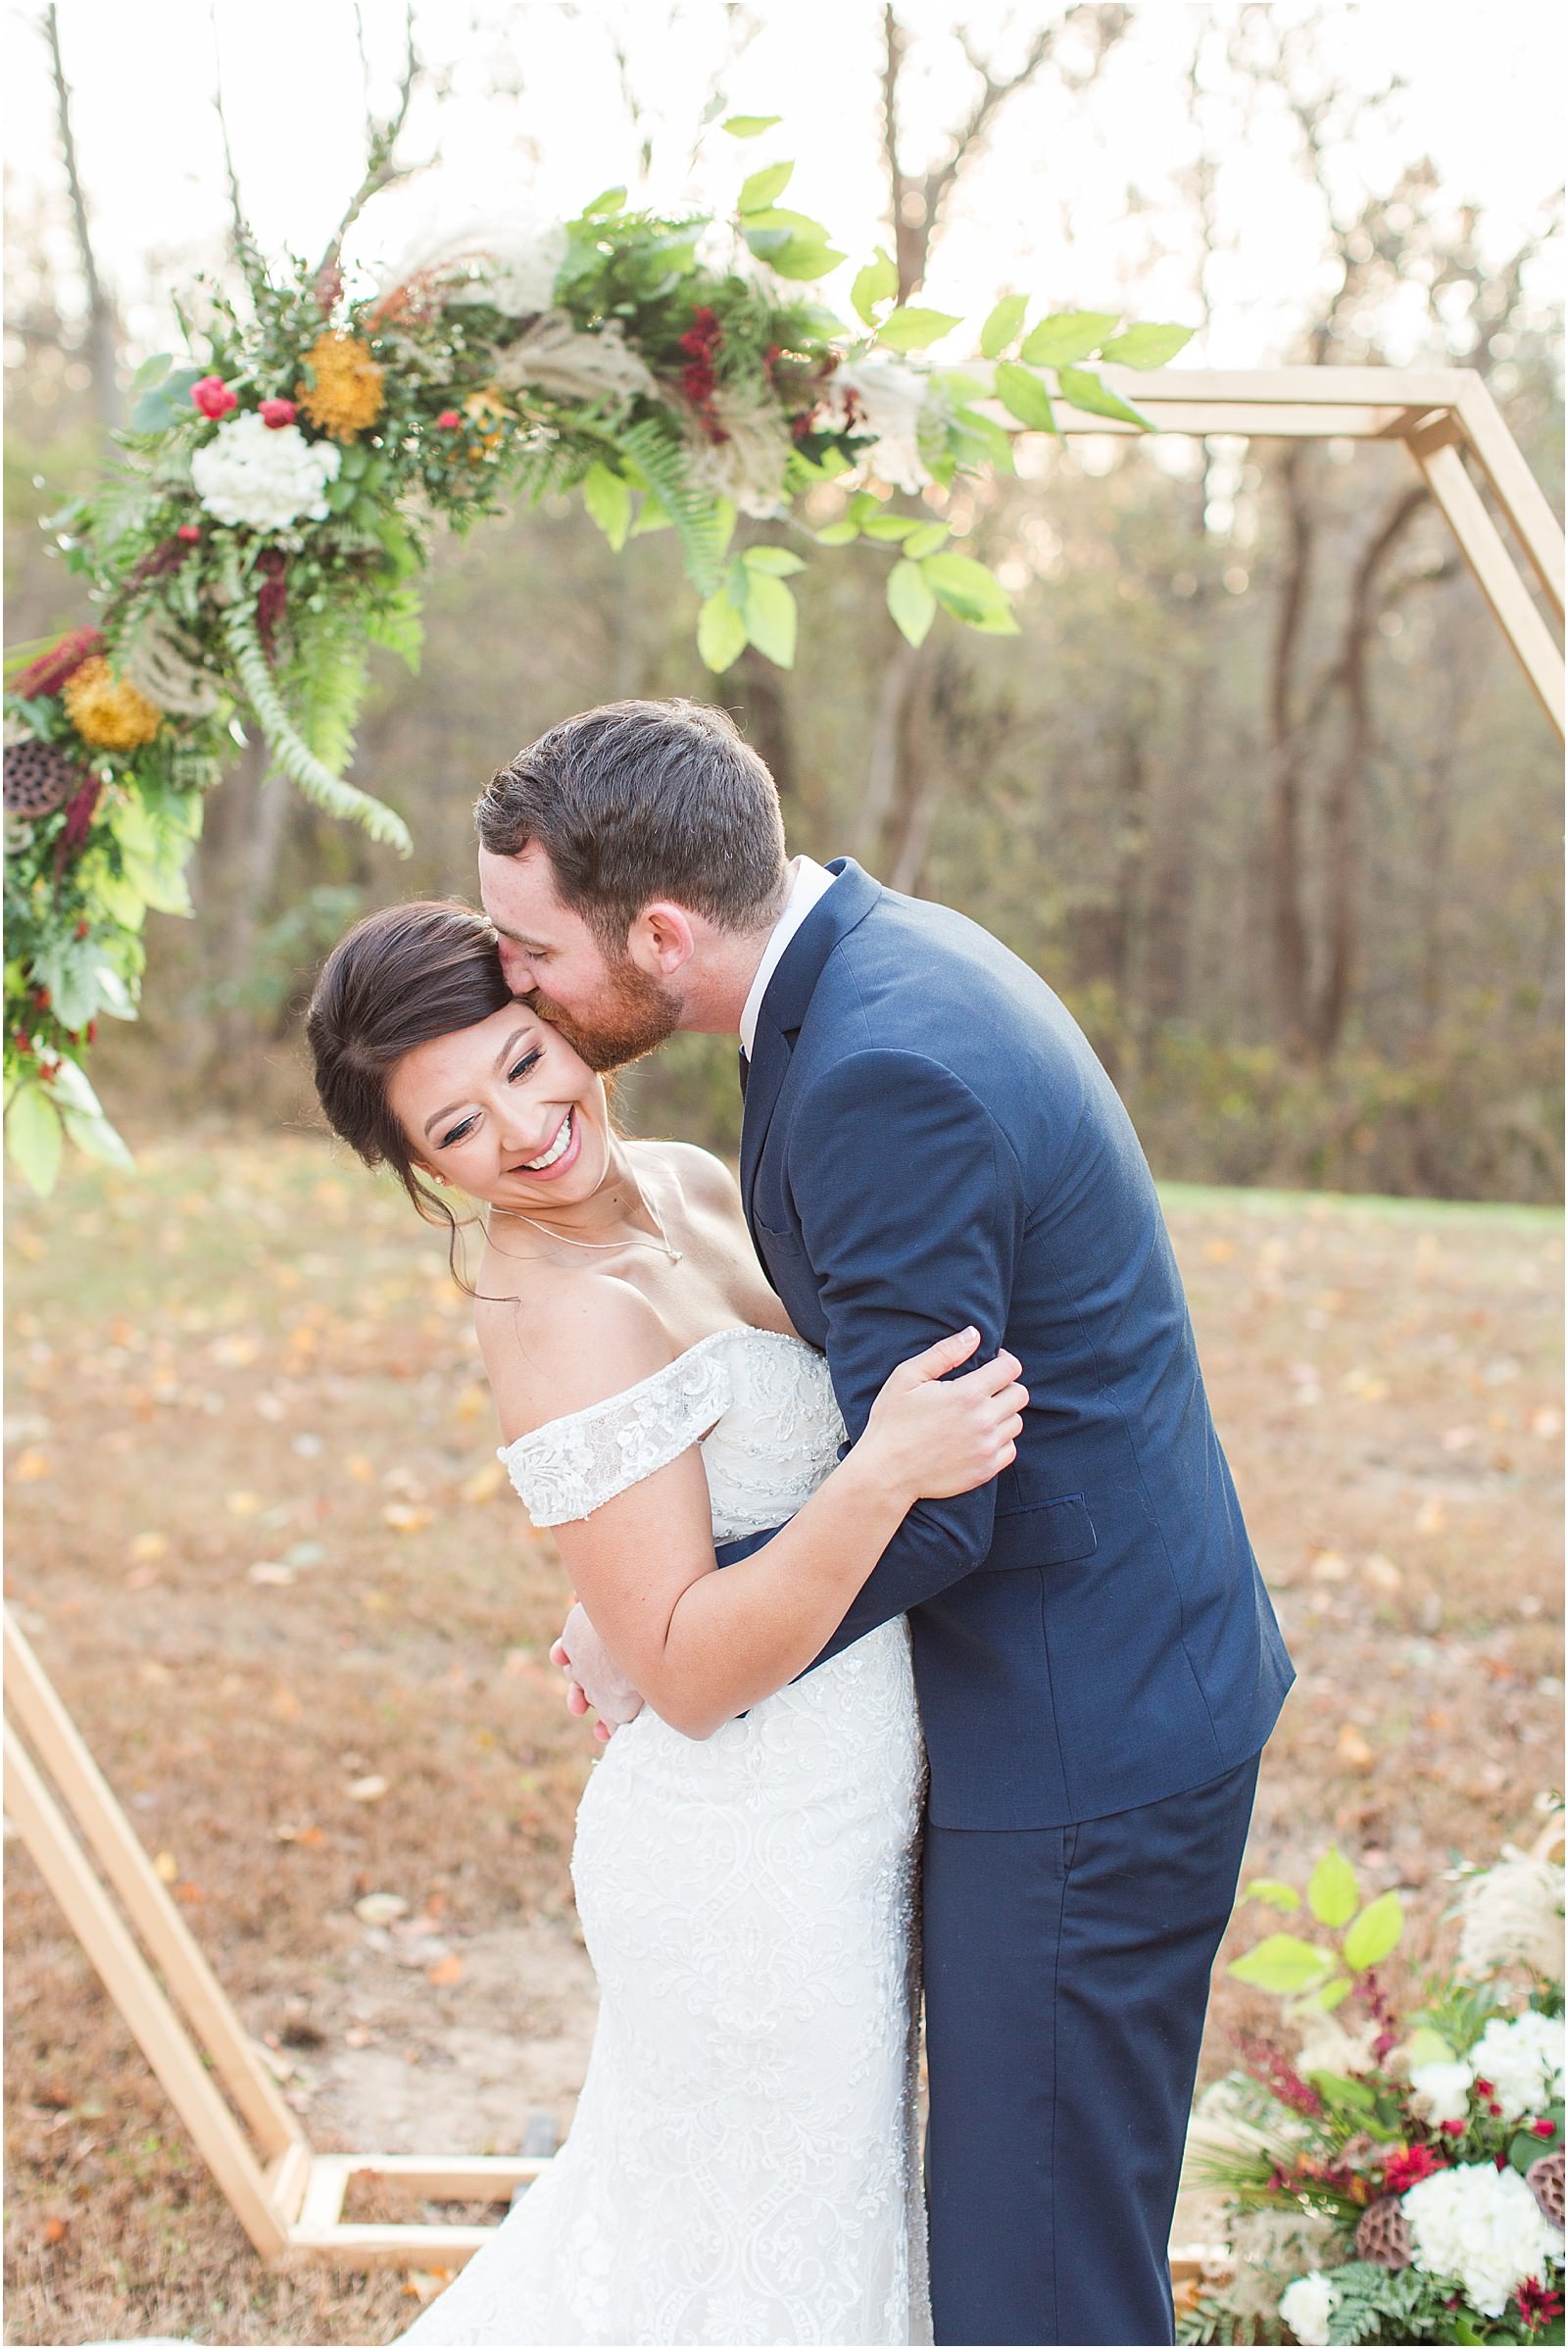 Walker and Alyssa's intimate fall wedding in Southern Indiana. | Wedding Photography | The Corner House Wedding | Southern Indiana Wedding | #fallwedding #intimatewedding | 071.jpg